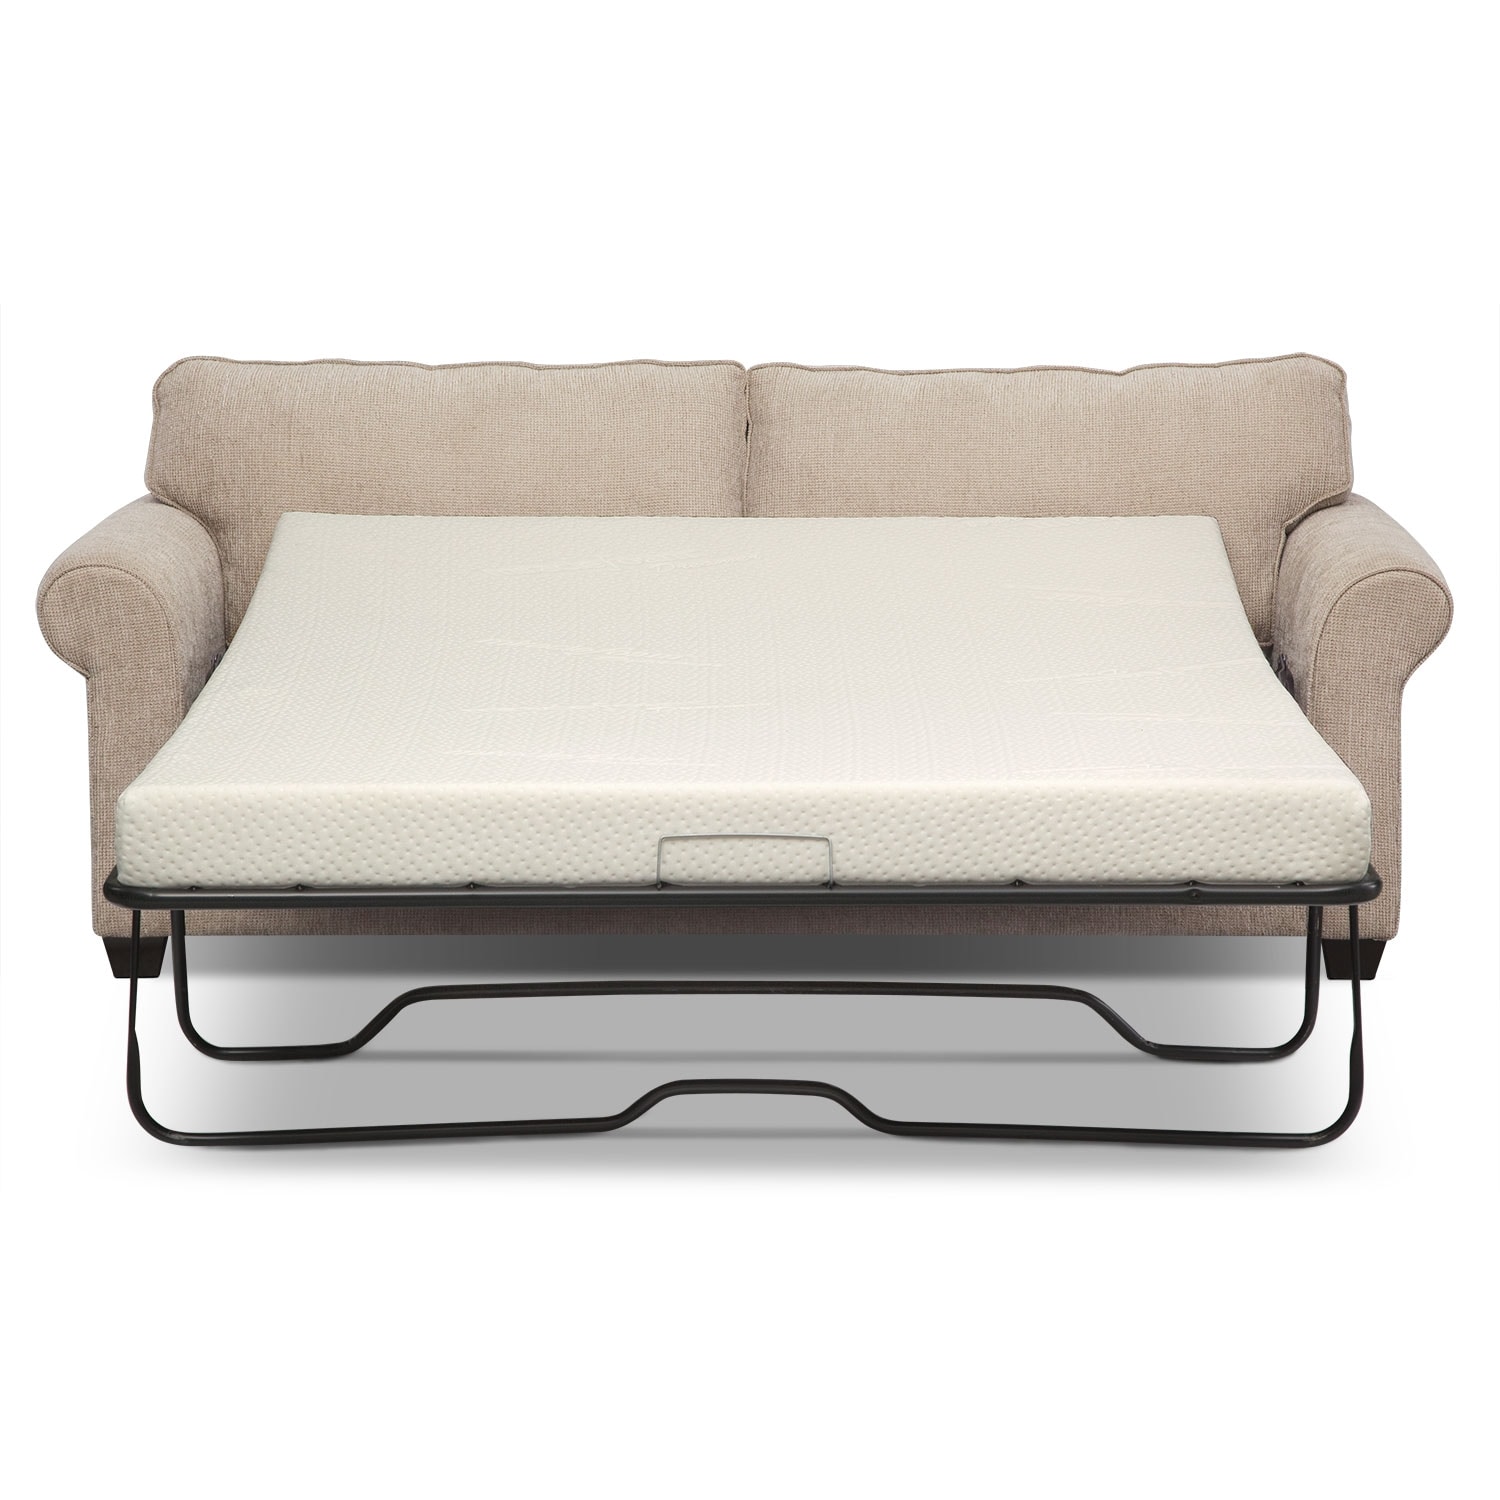 Fletcher Queen Memory Foam Sleeper Sofa  Beige  Value City Furniture